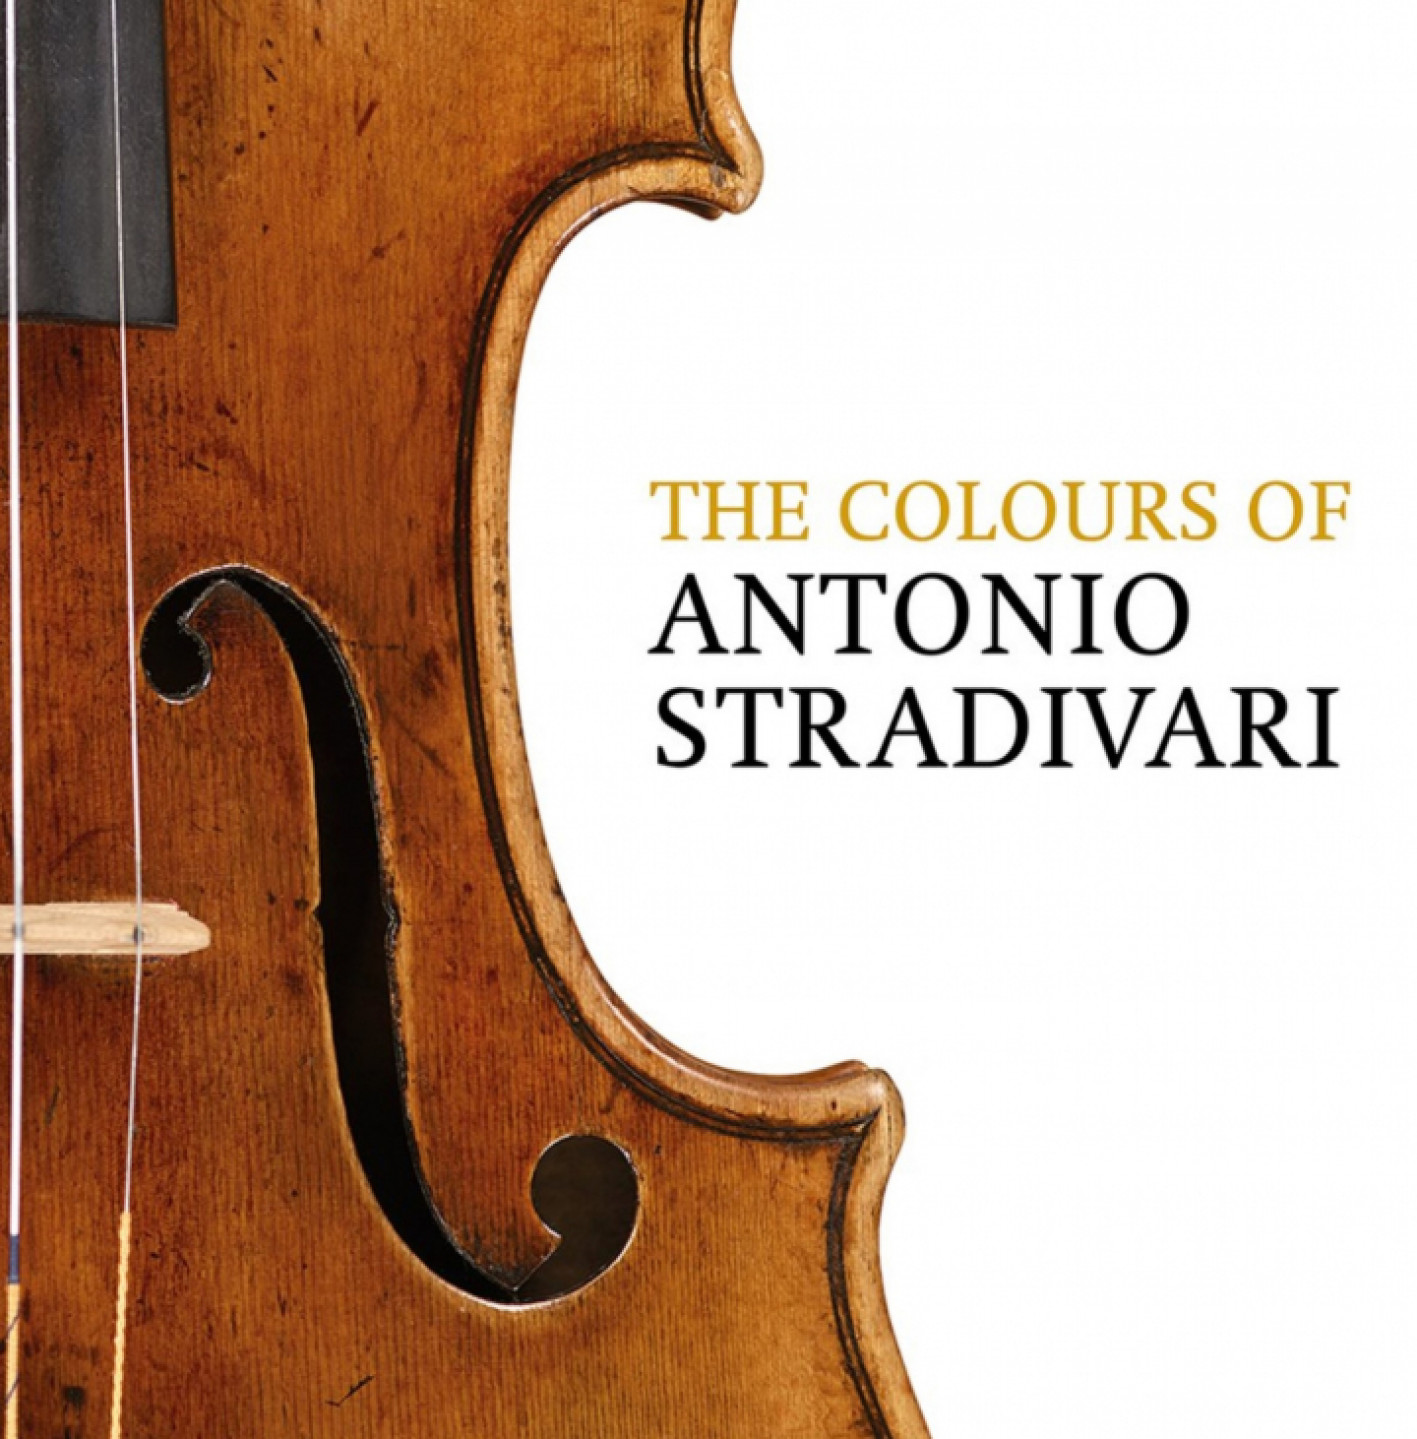 The Colours of Antonio Stradivari